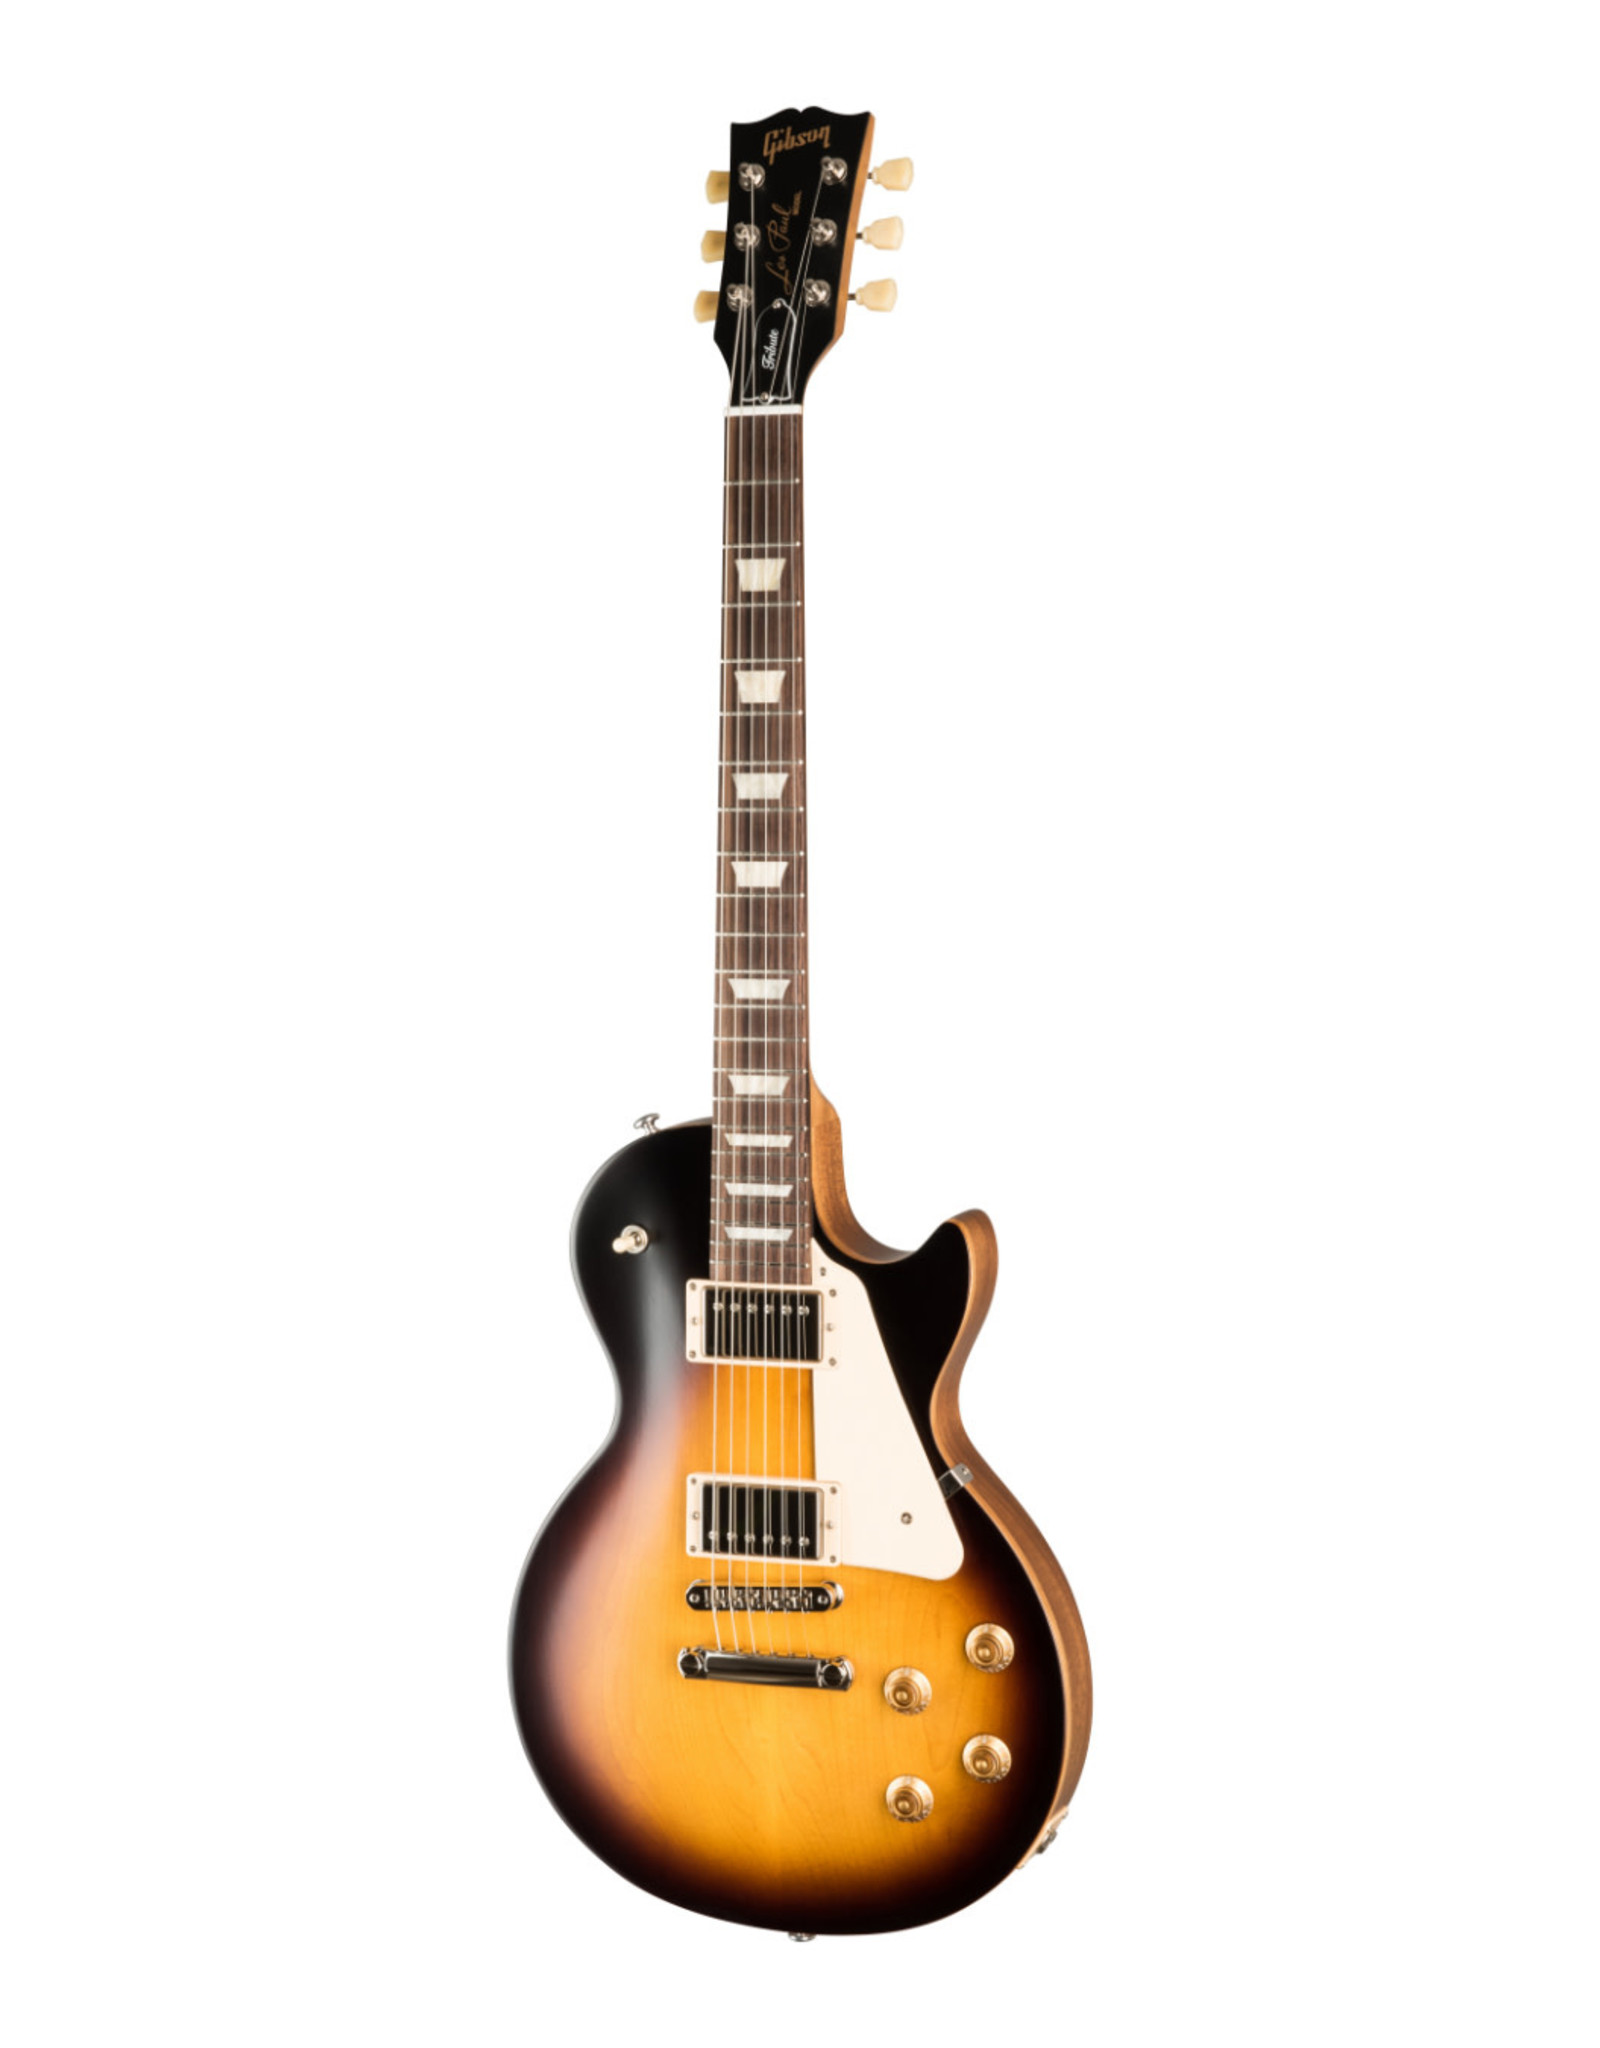 Gibson Gibson Les Paul Tribute - Satin Tobacco Burst w/Leather Soft Case (LPTR19STNH)